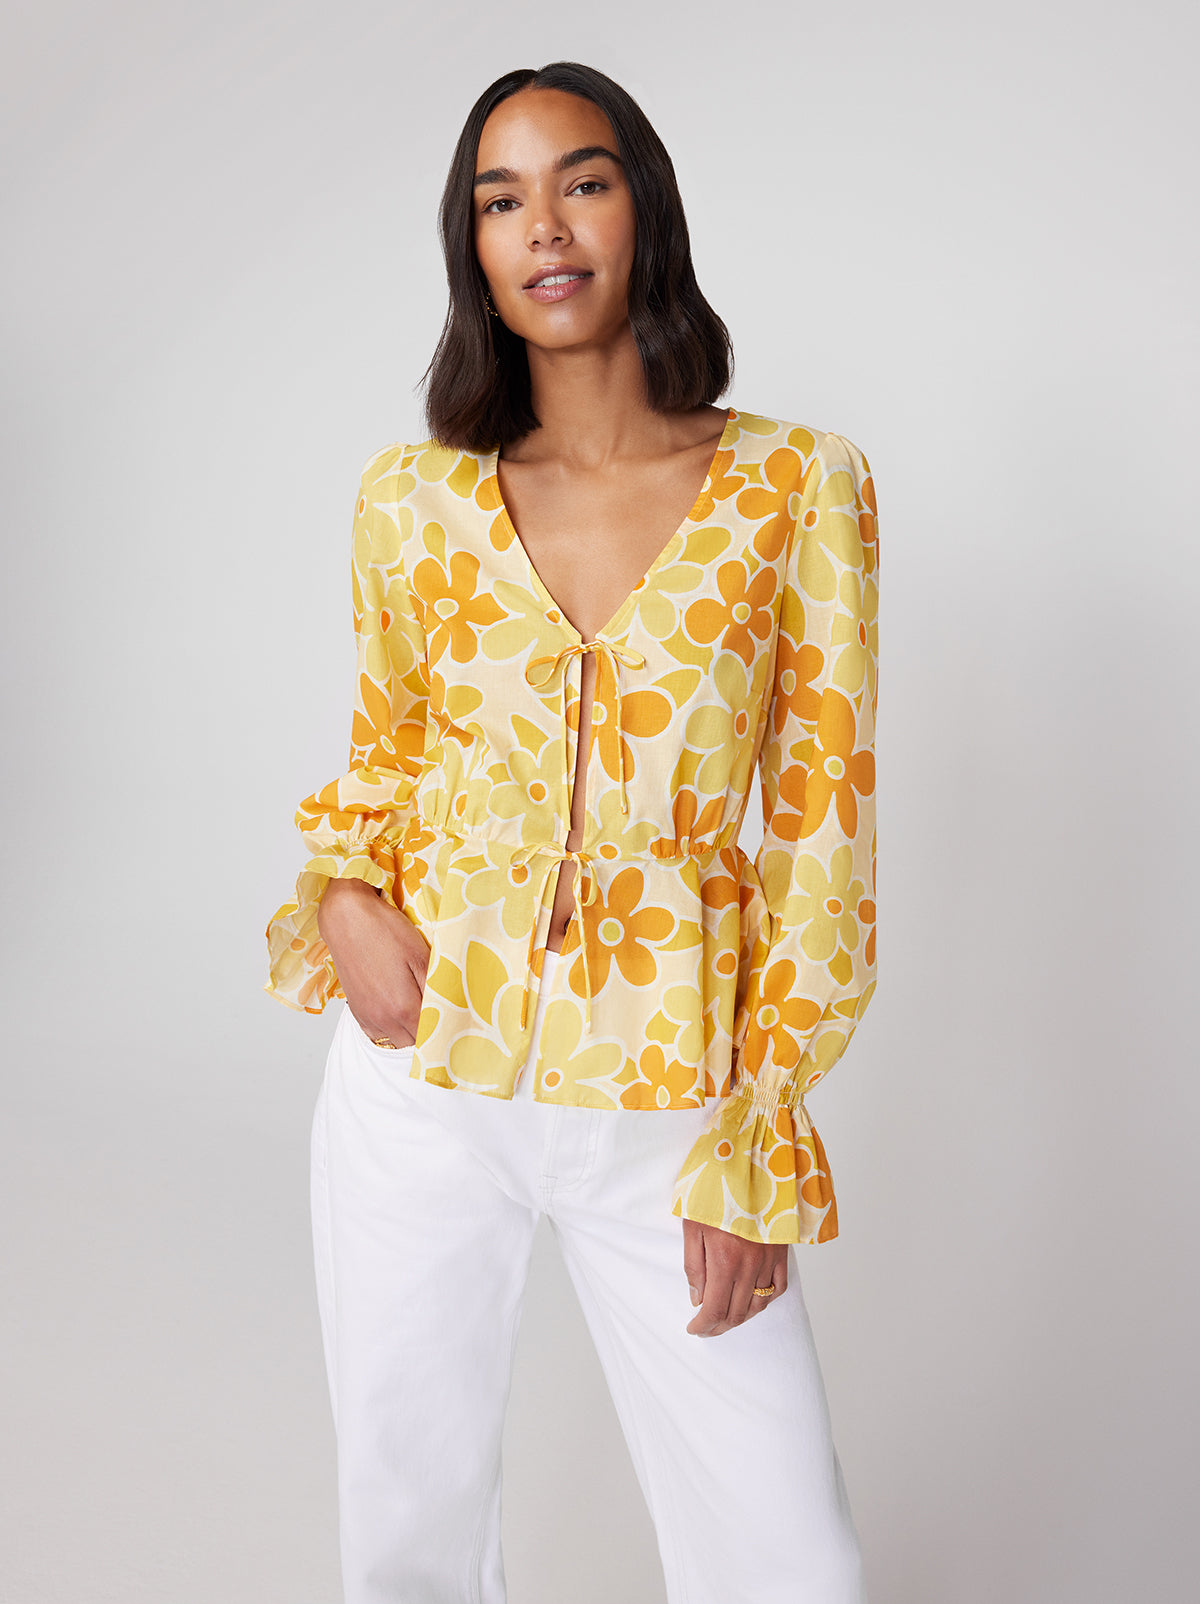 Etta Yellow Floral Print Tie Front Top | KITRI Studio